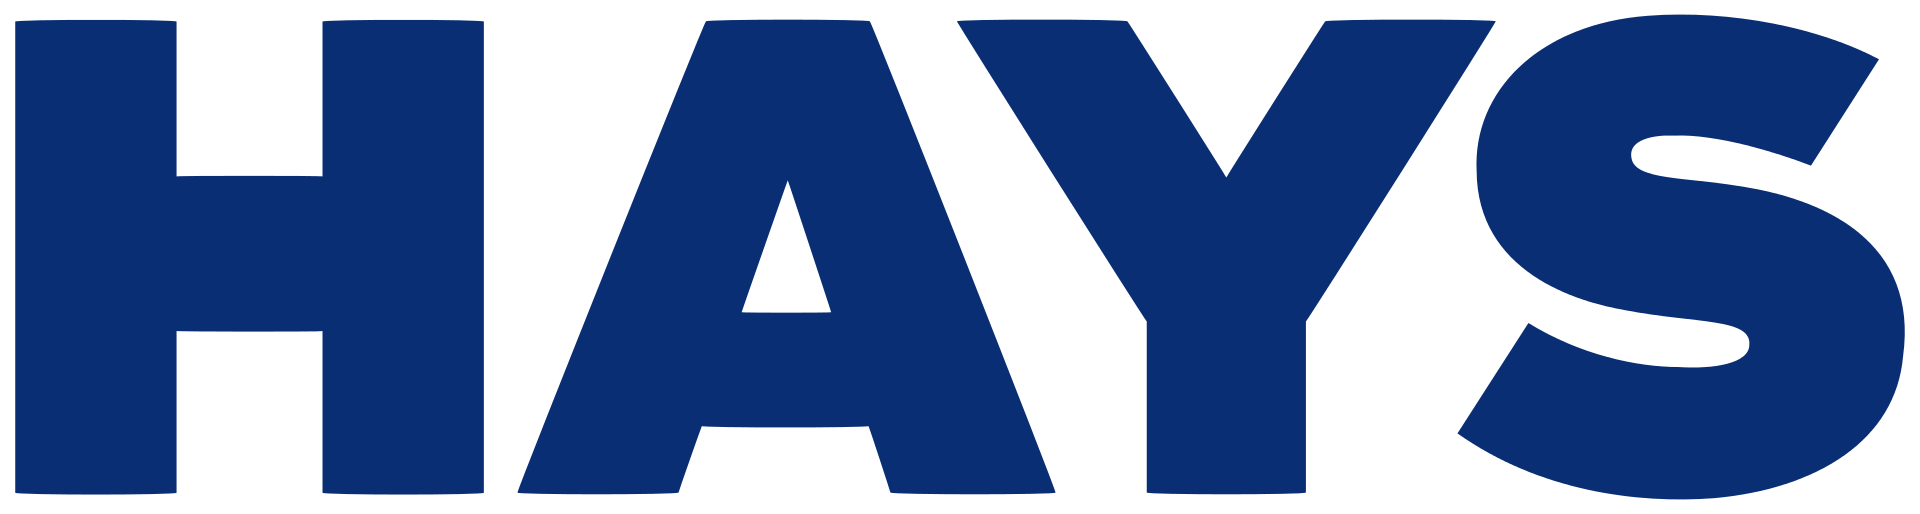 Hays Brand Logo